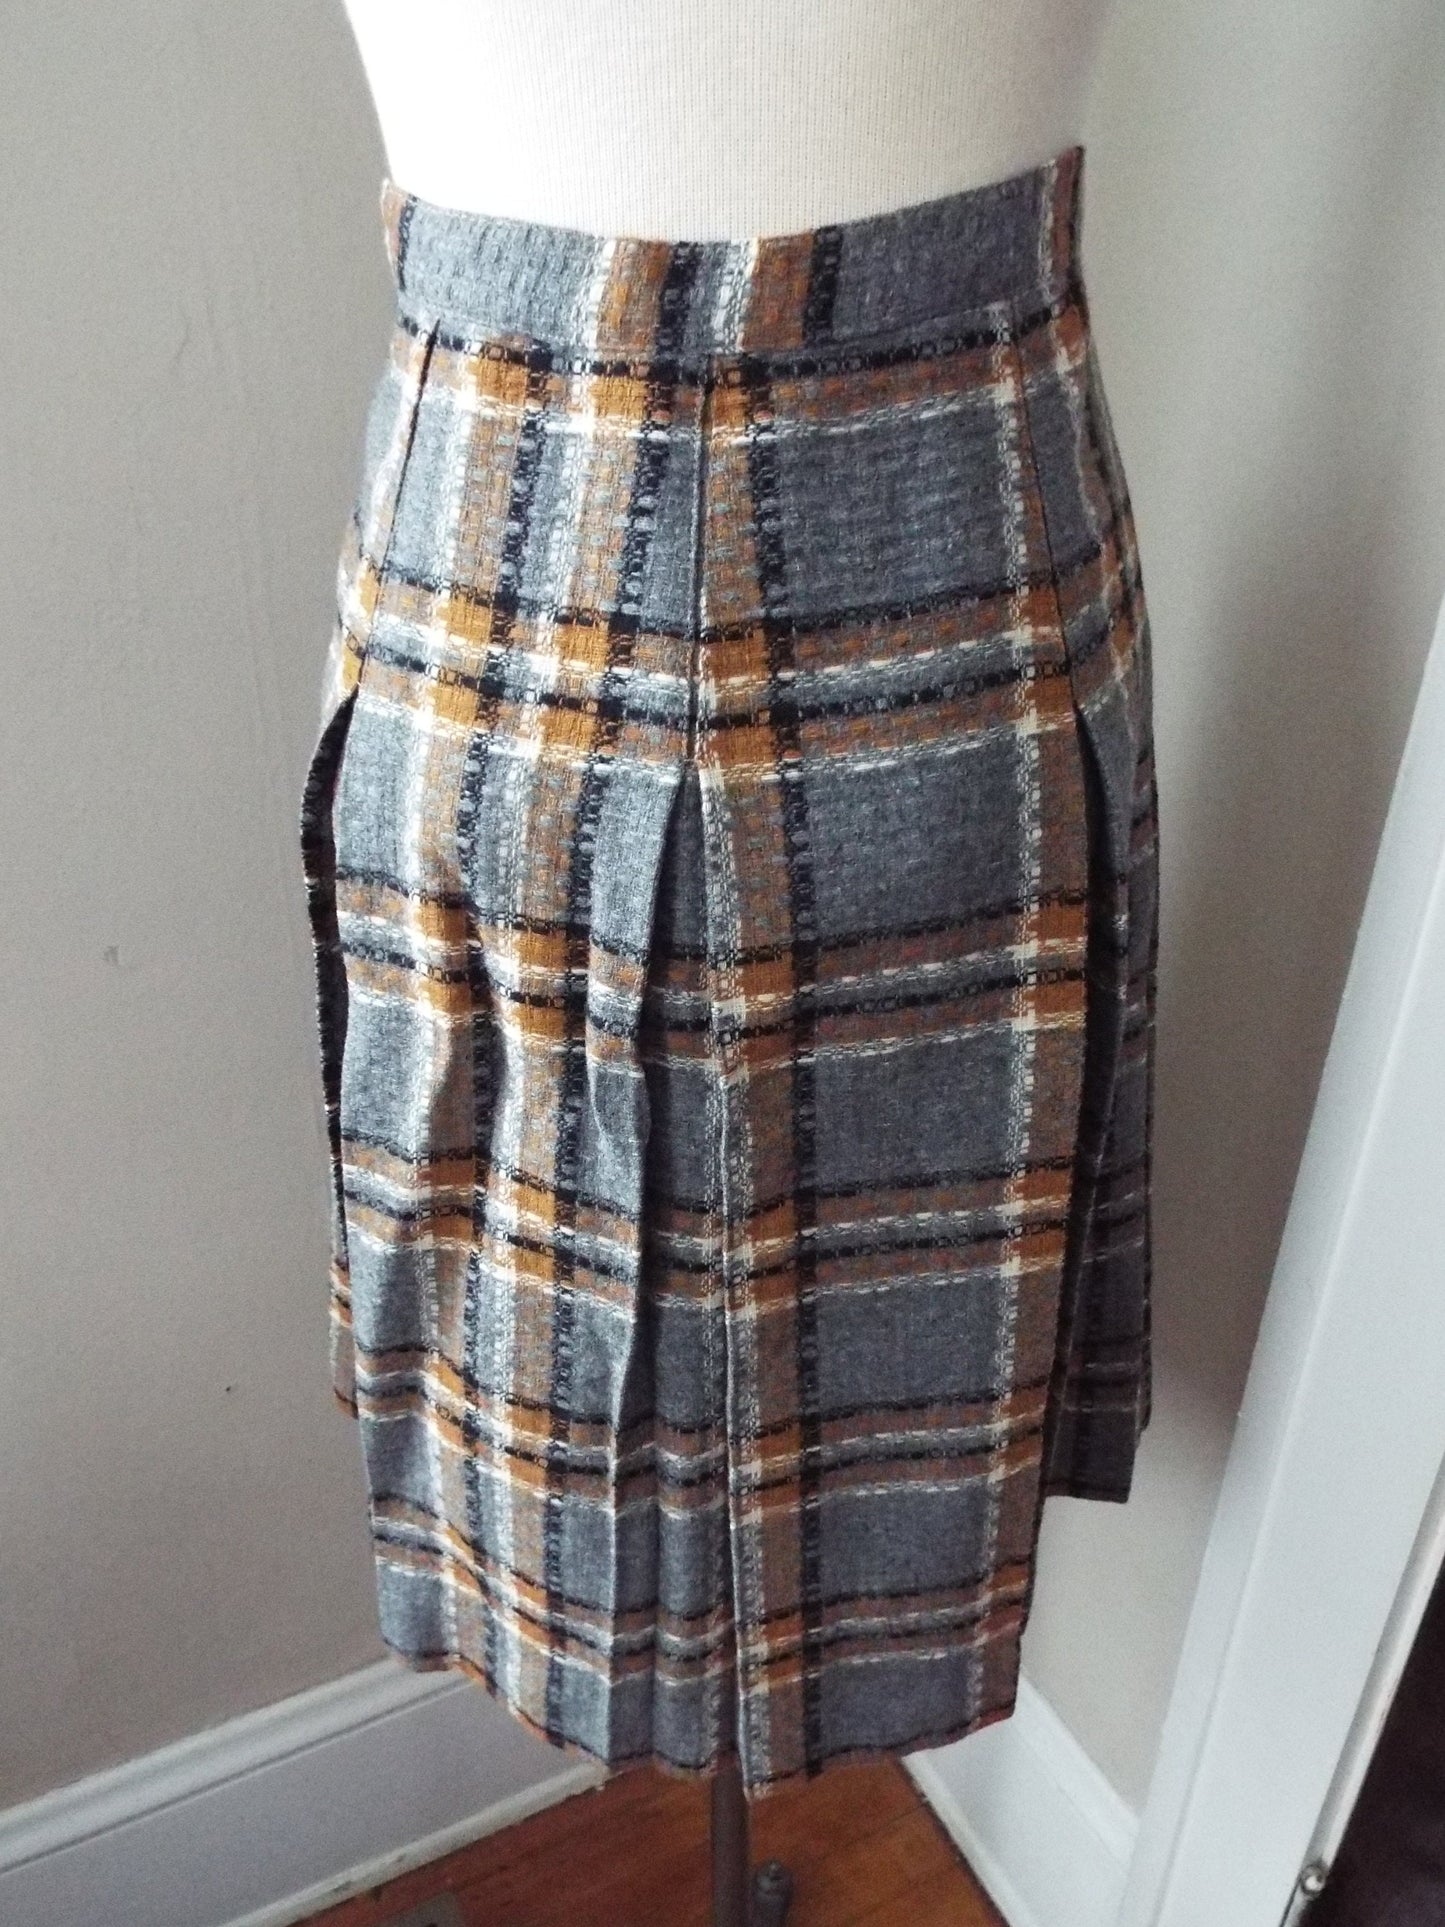 Vintage Pleated Plaid Gray Skirt by Carol Brent